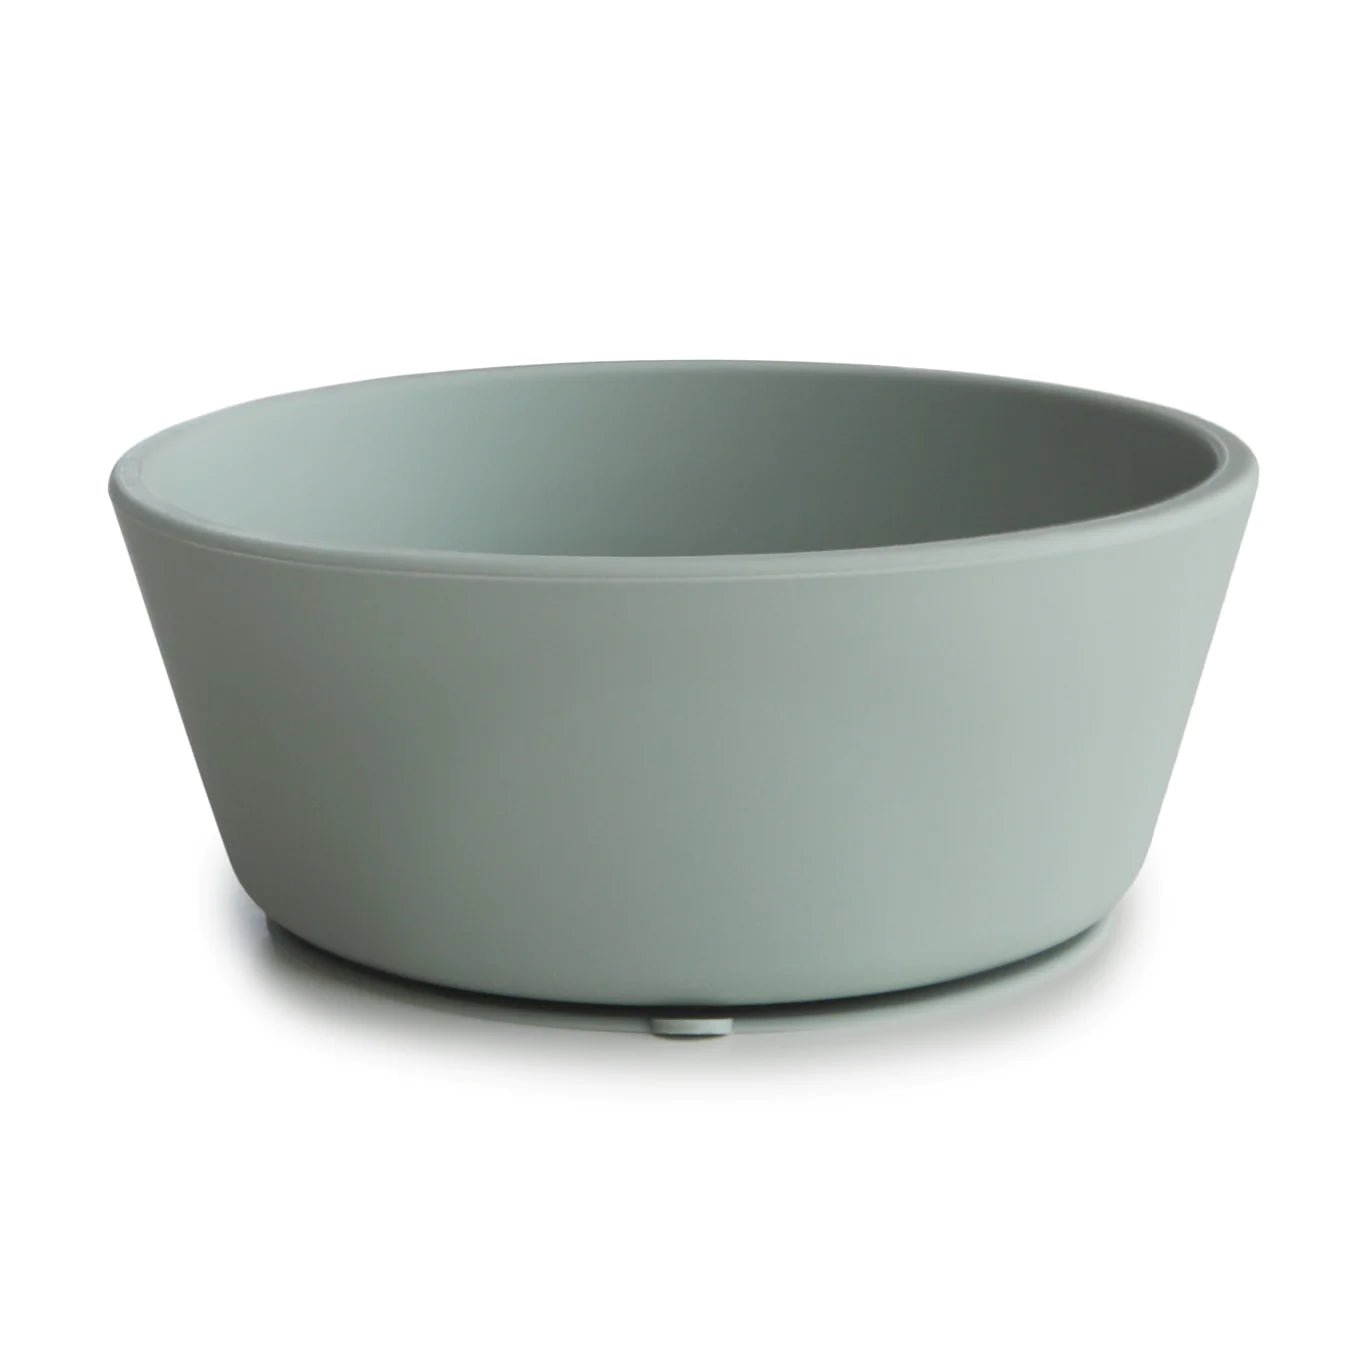 Silicone Baby Bowl - Grey